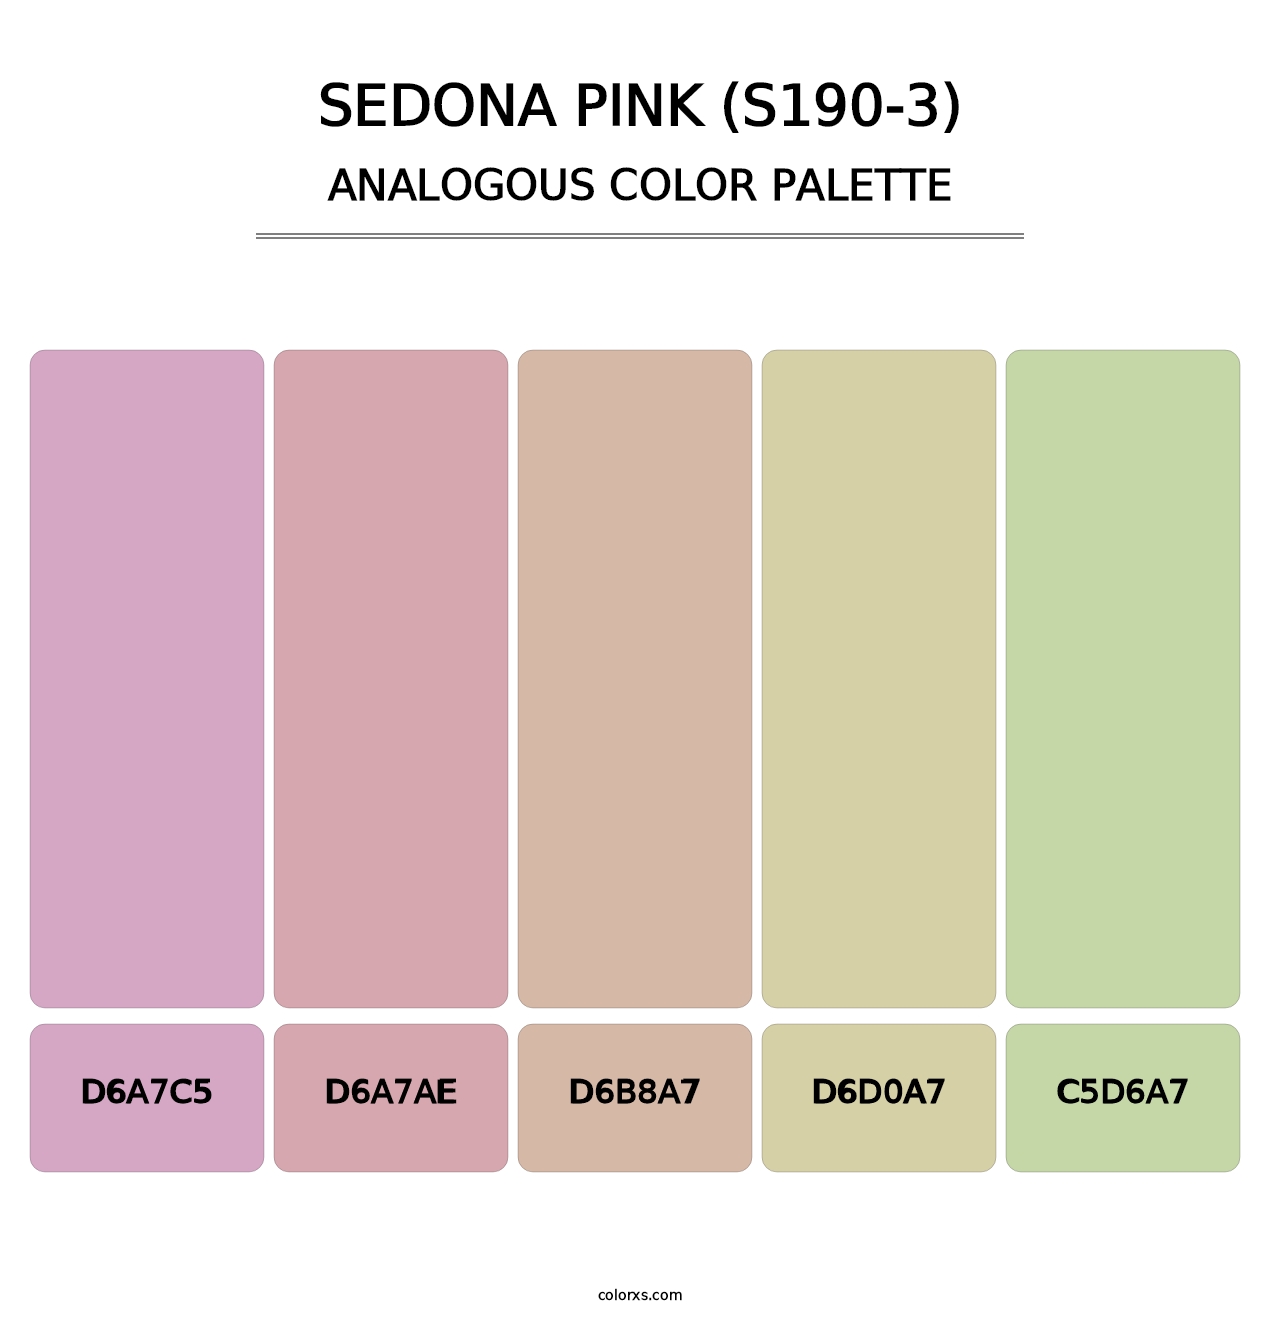 Sedona Pink (S190-3) - Analogous Color Palette